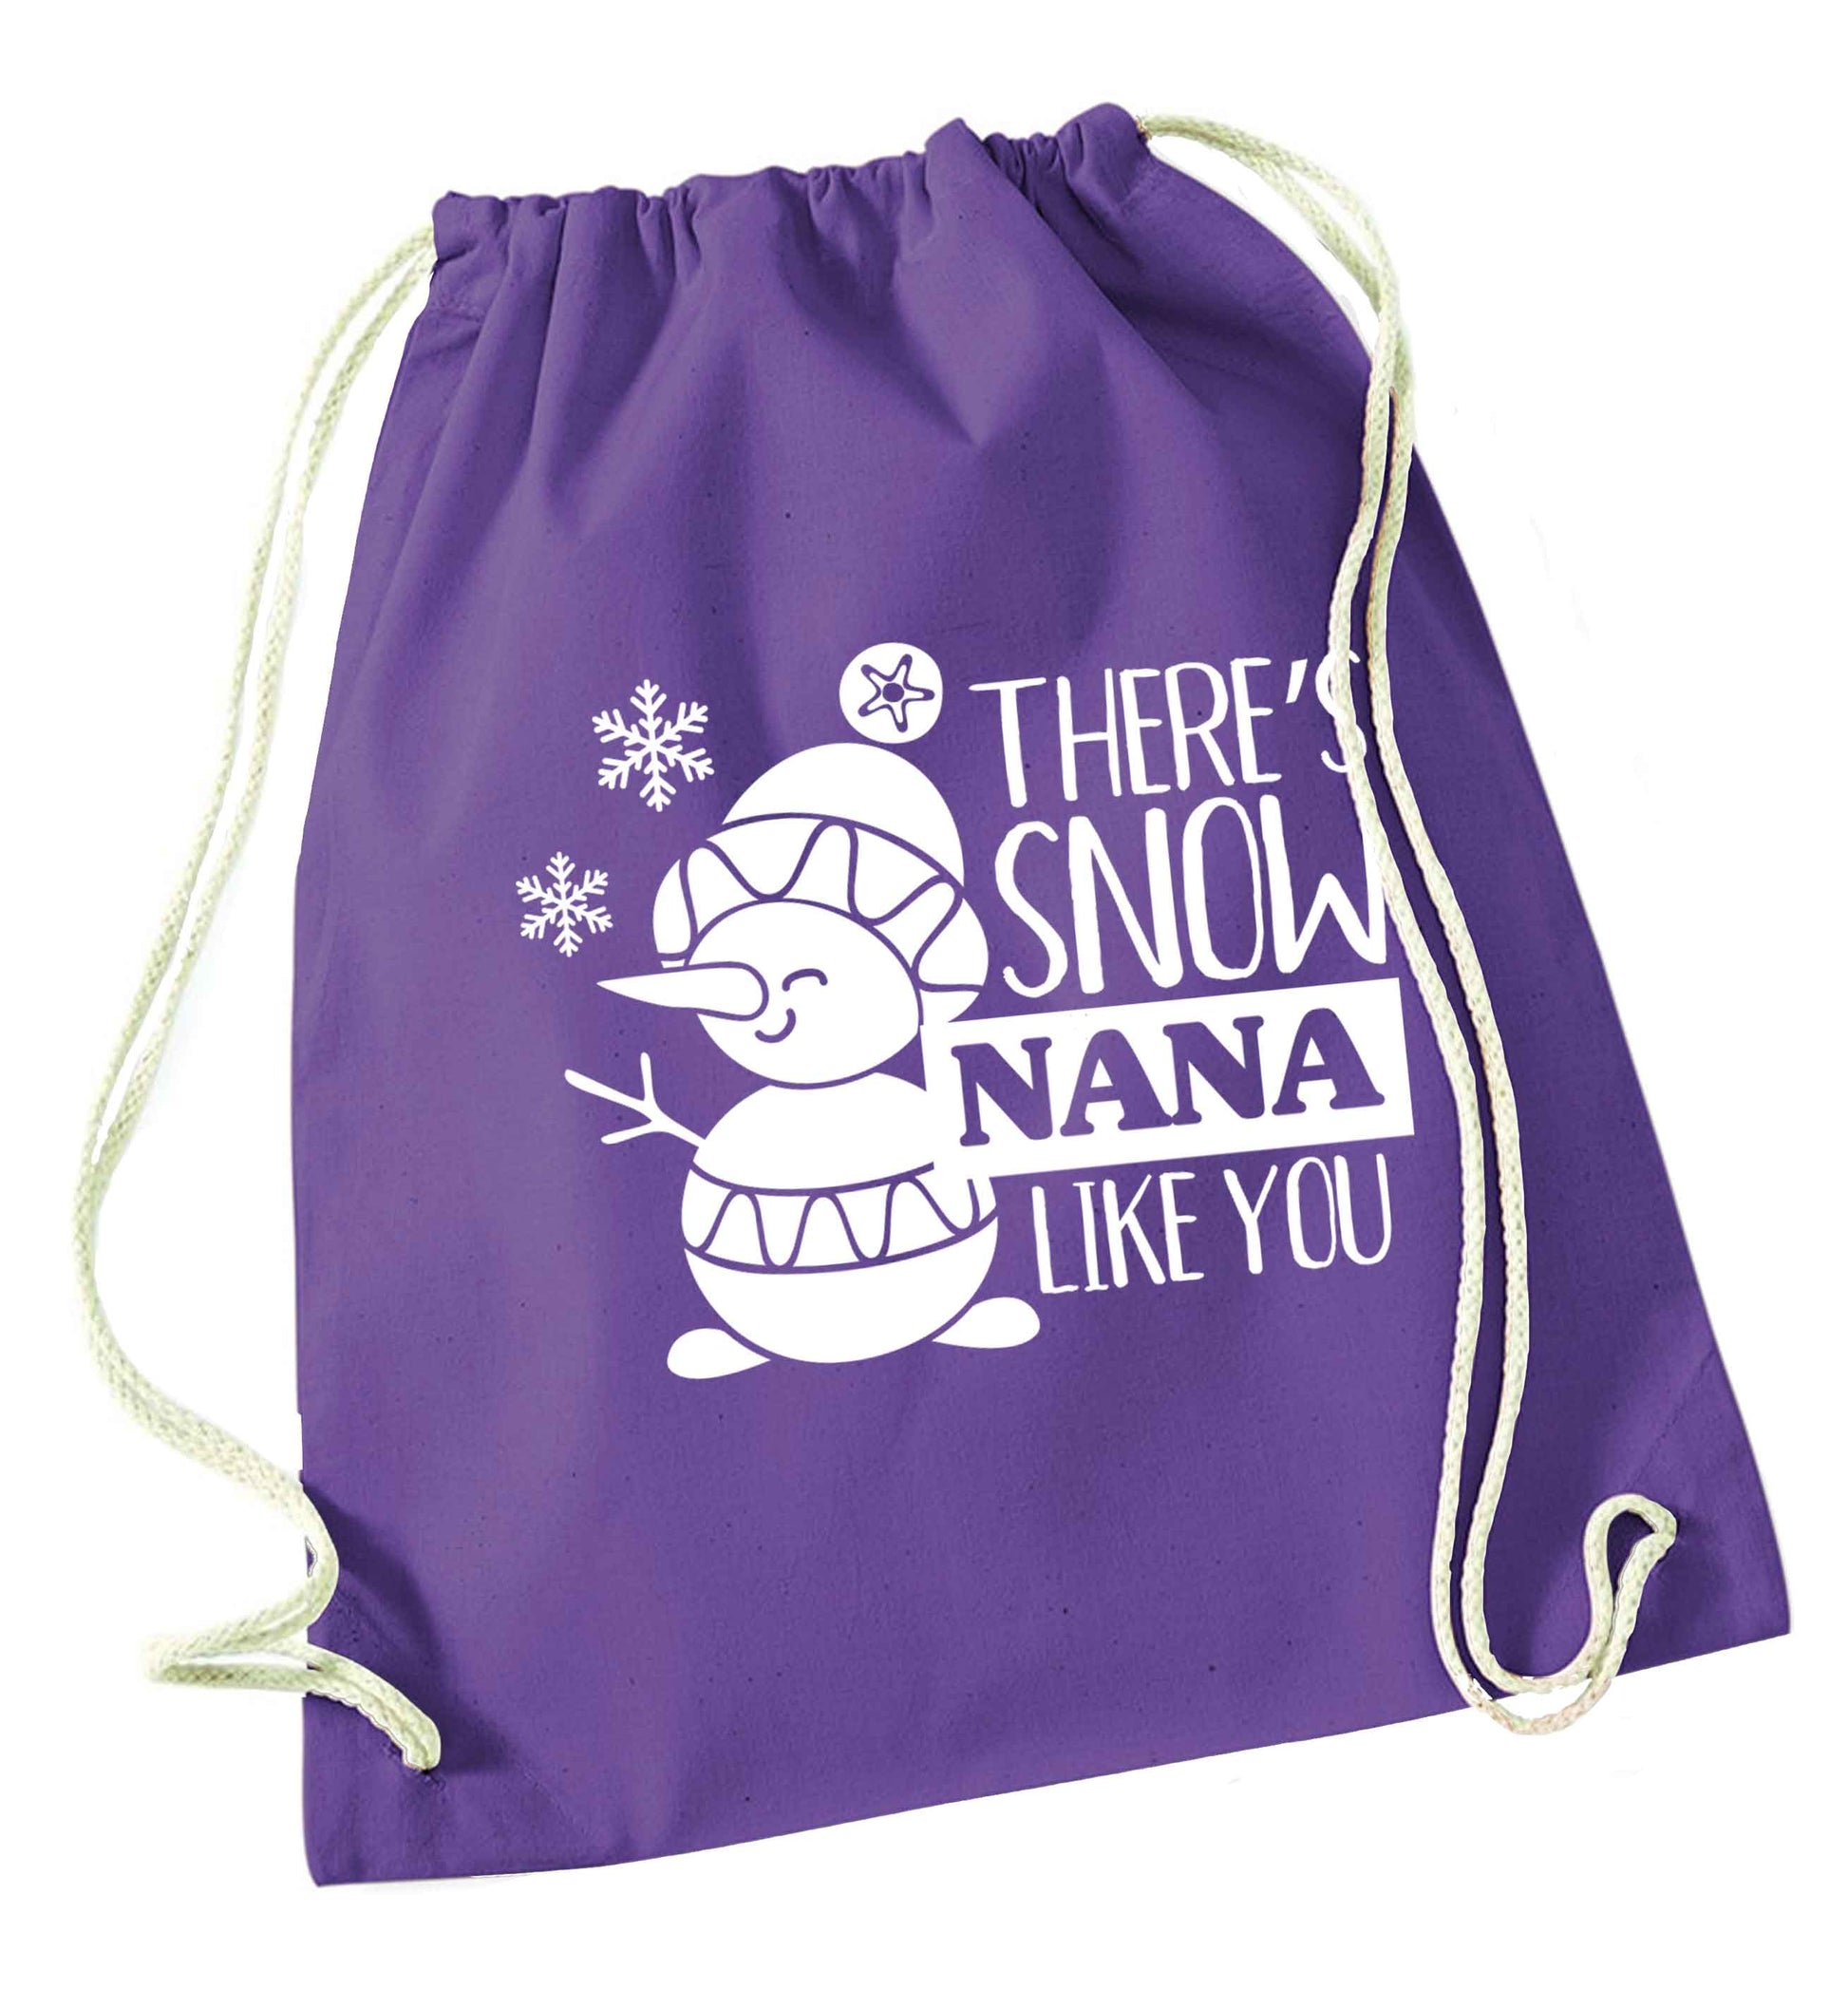 There's snow nana like you purple drawstring bag